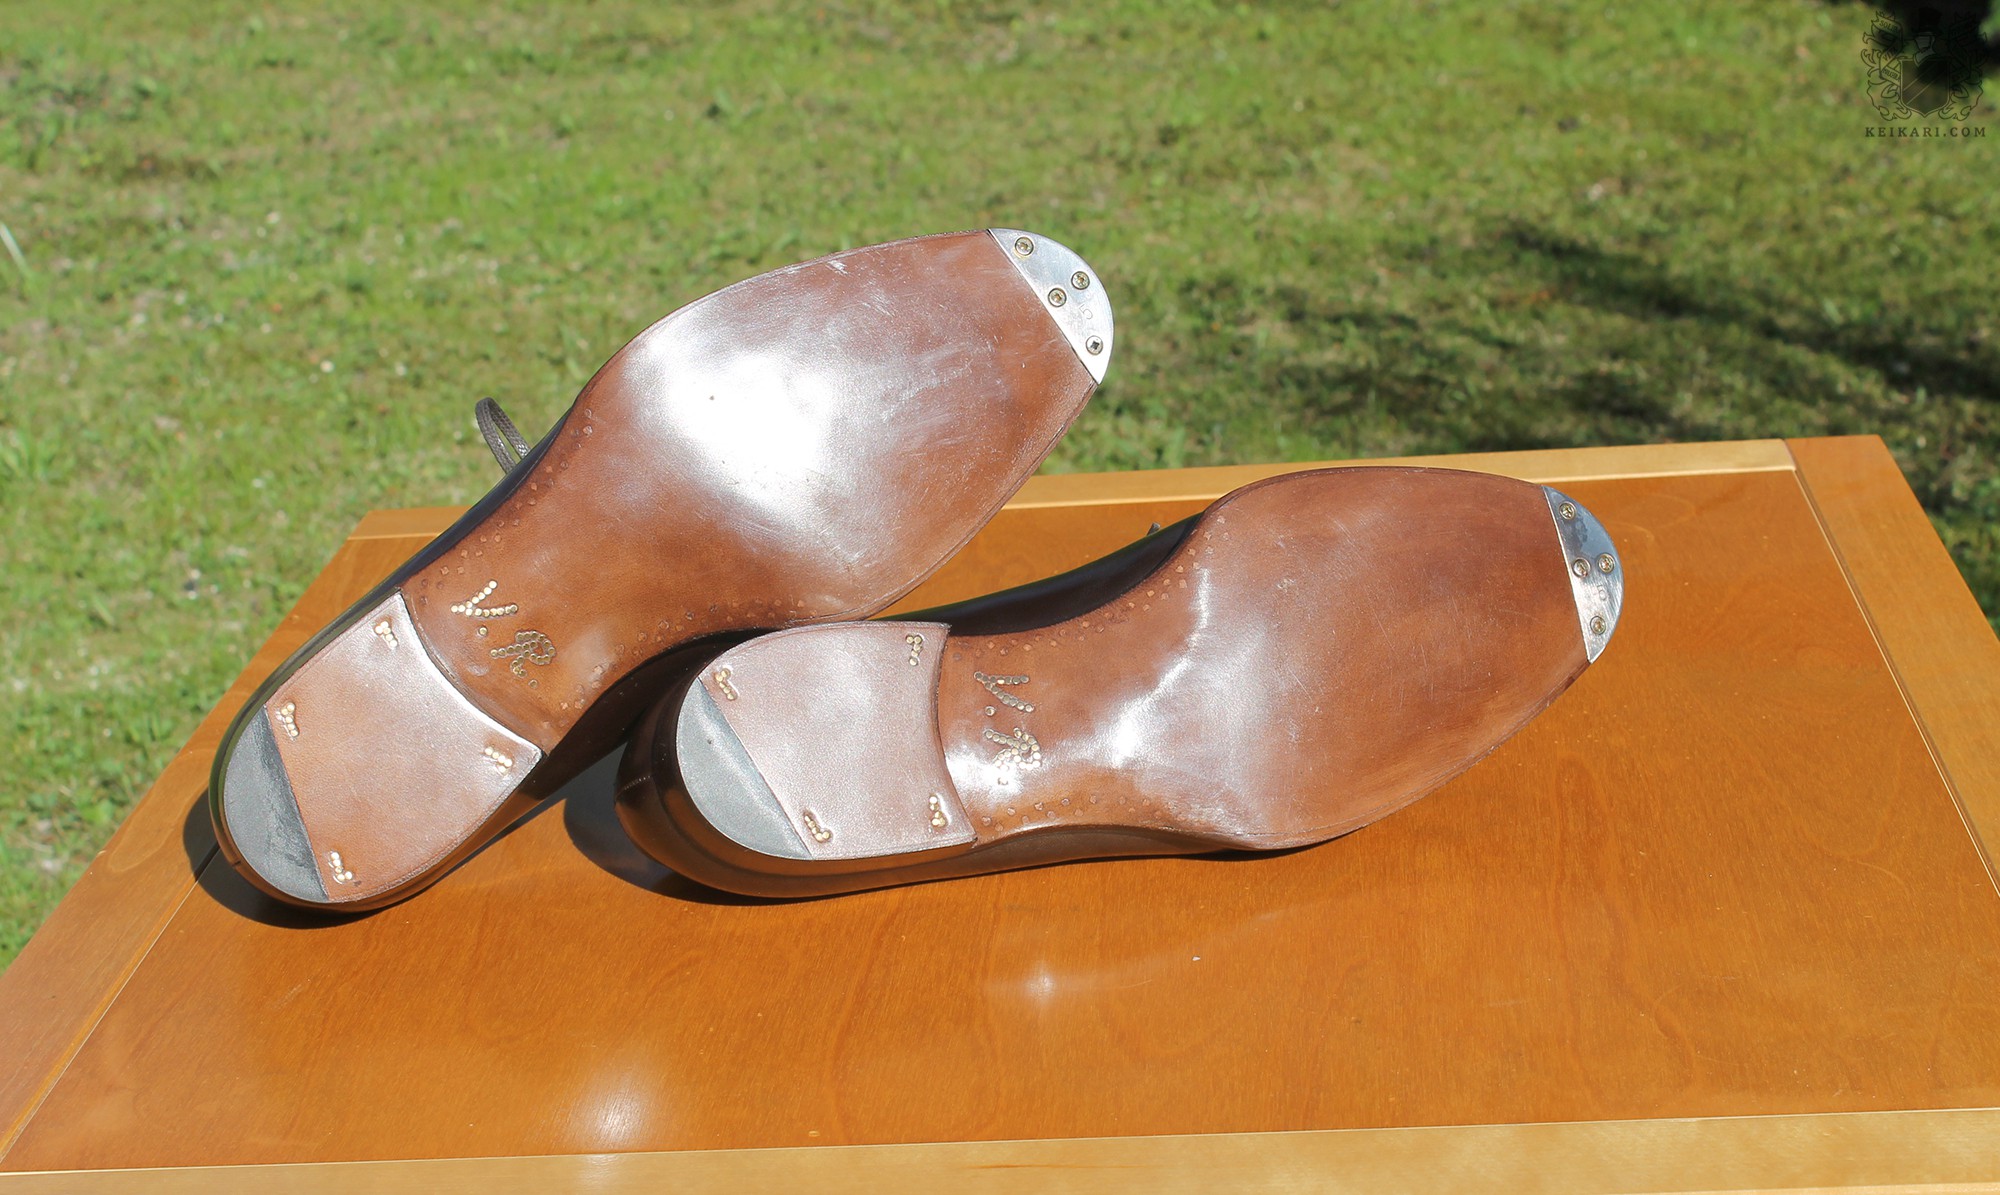 Anatomy_of_Saint_Crispins_shoes_at_Keikari_dot_com14.jpg